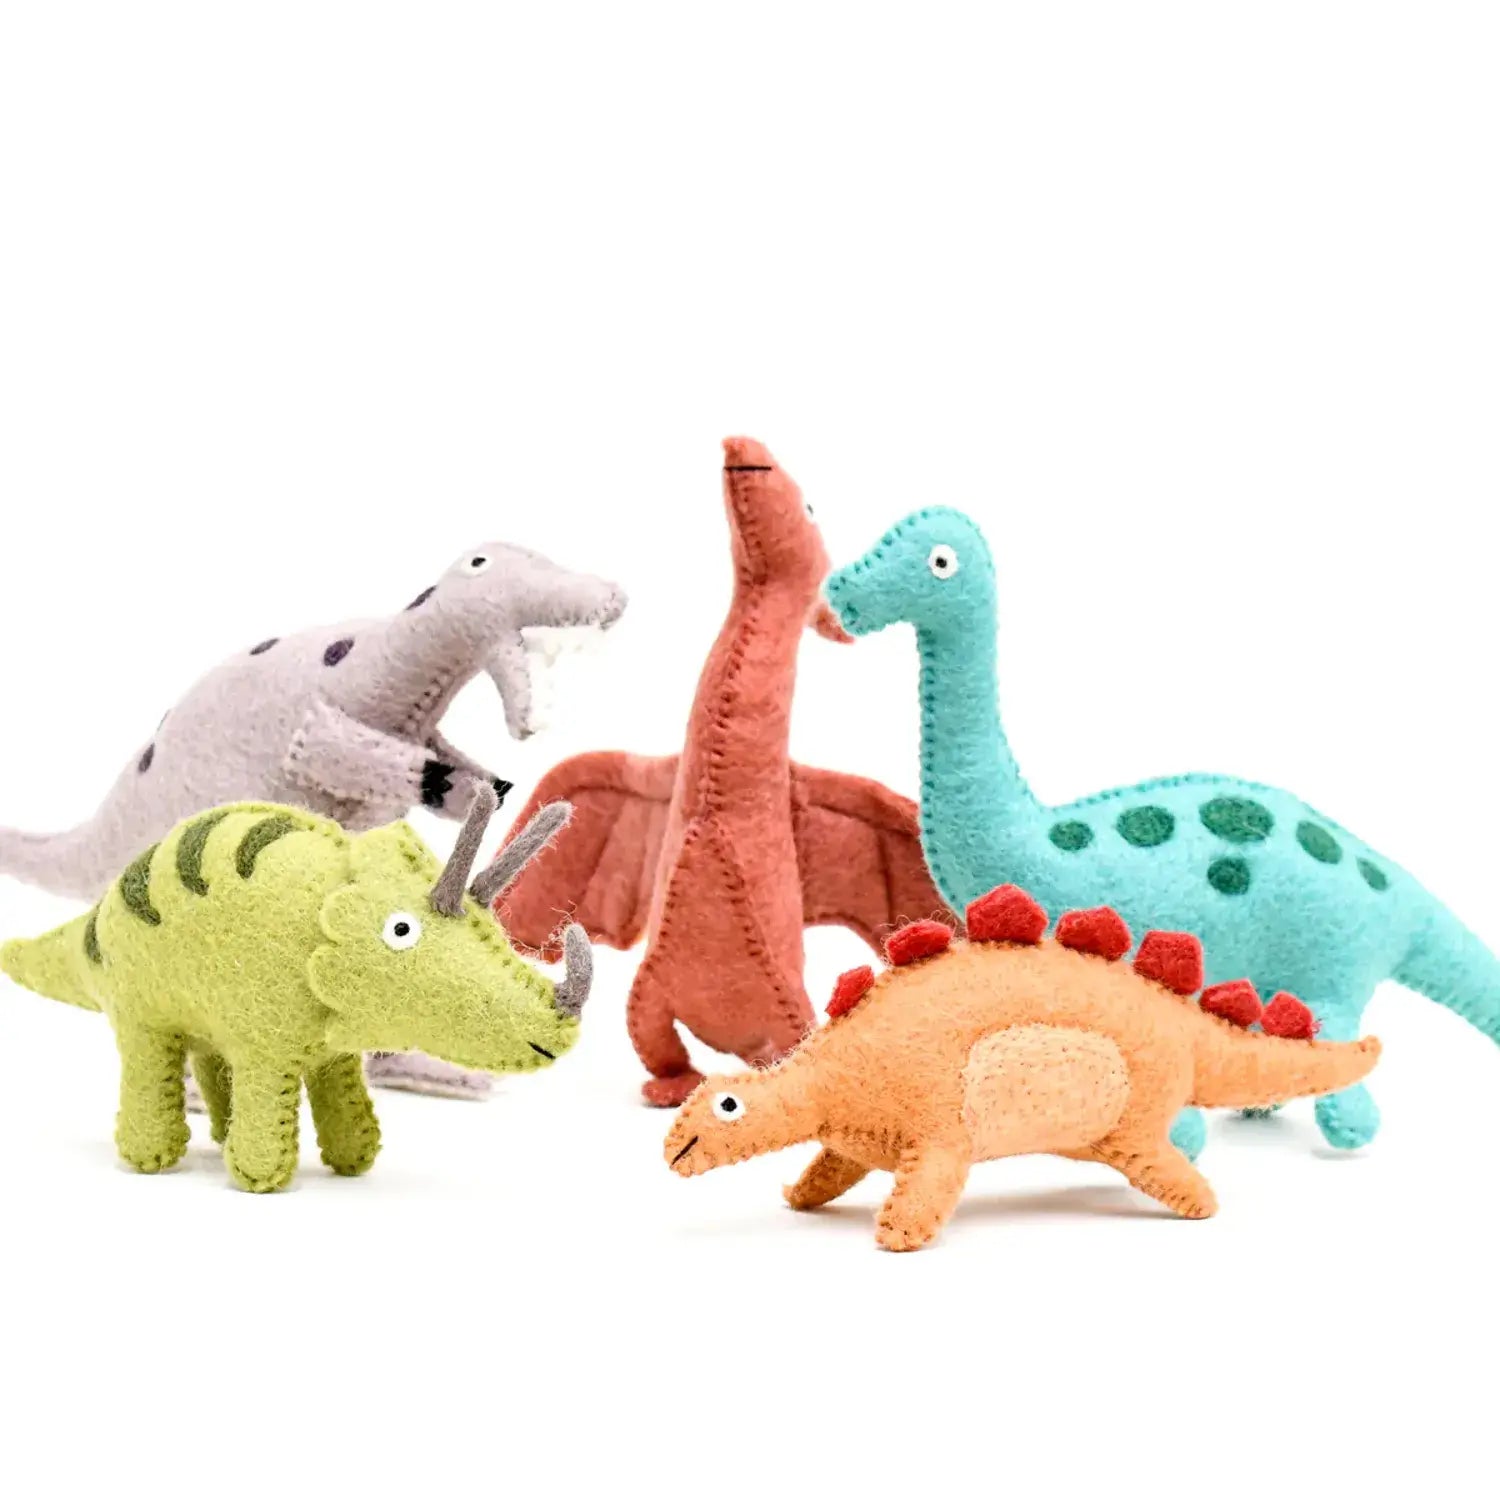 Felt Triceratops Dinosaur Toy by Tara Treasures